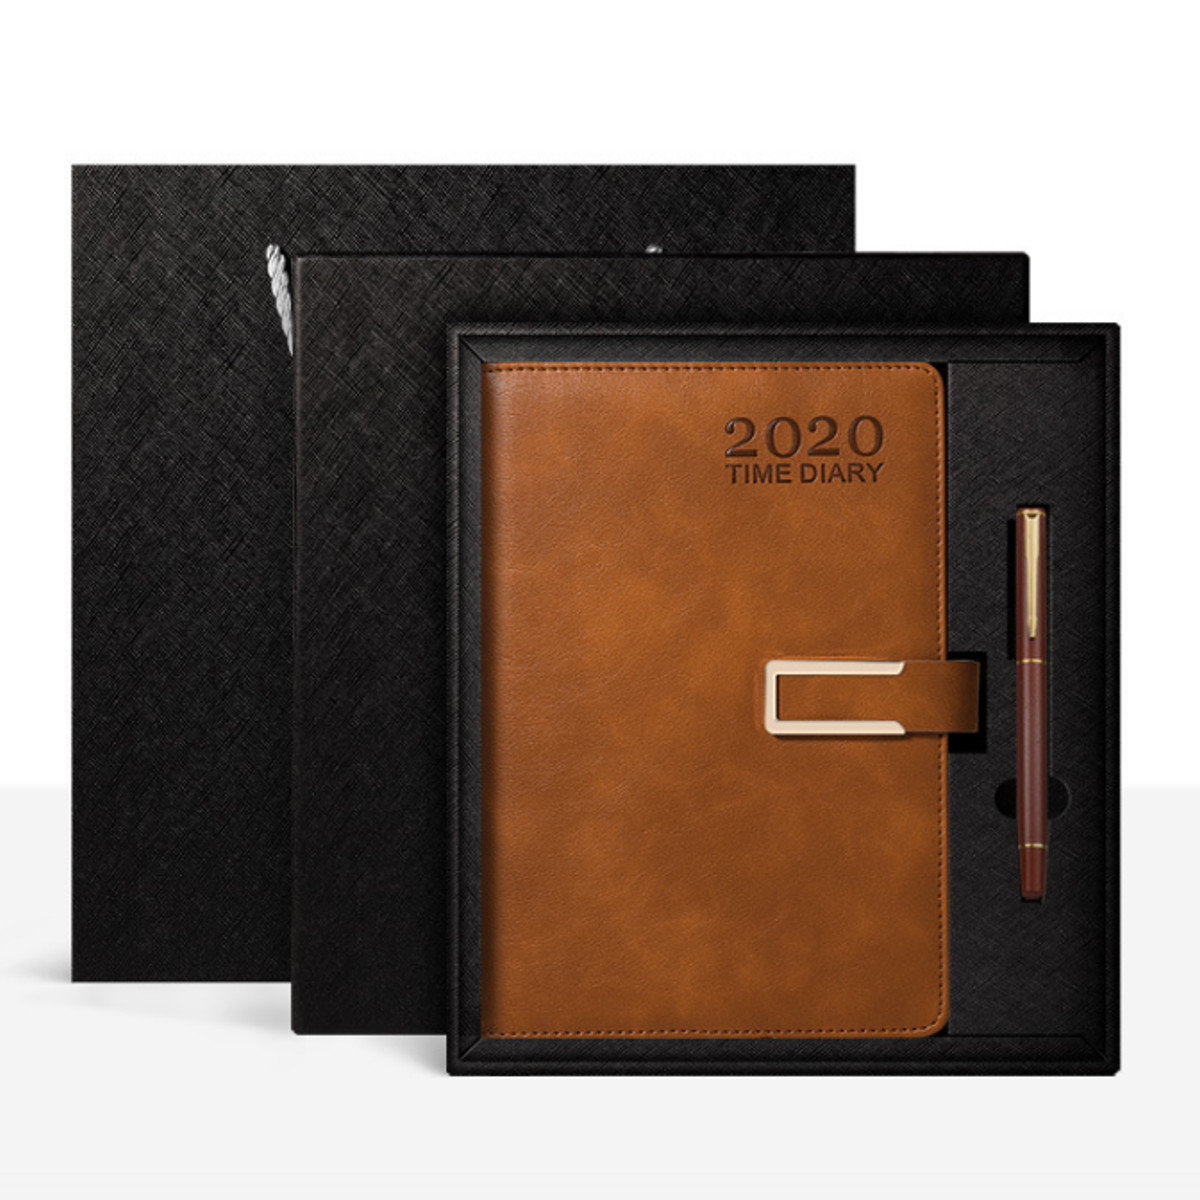 2020-schedule-book-365-days-daily-schedule-calendar-notepad-work-log-notebook-1617396-3